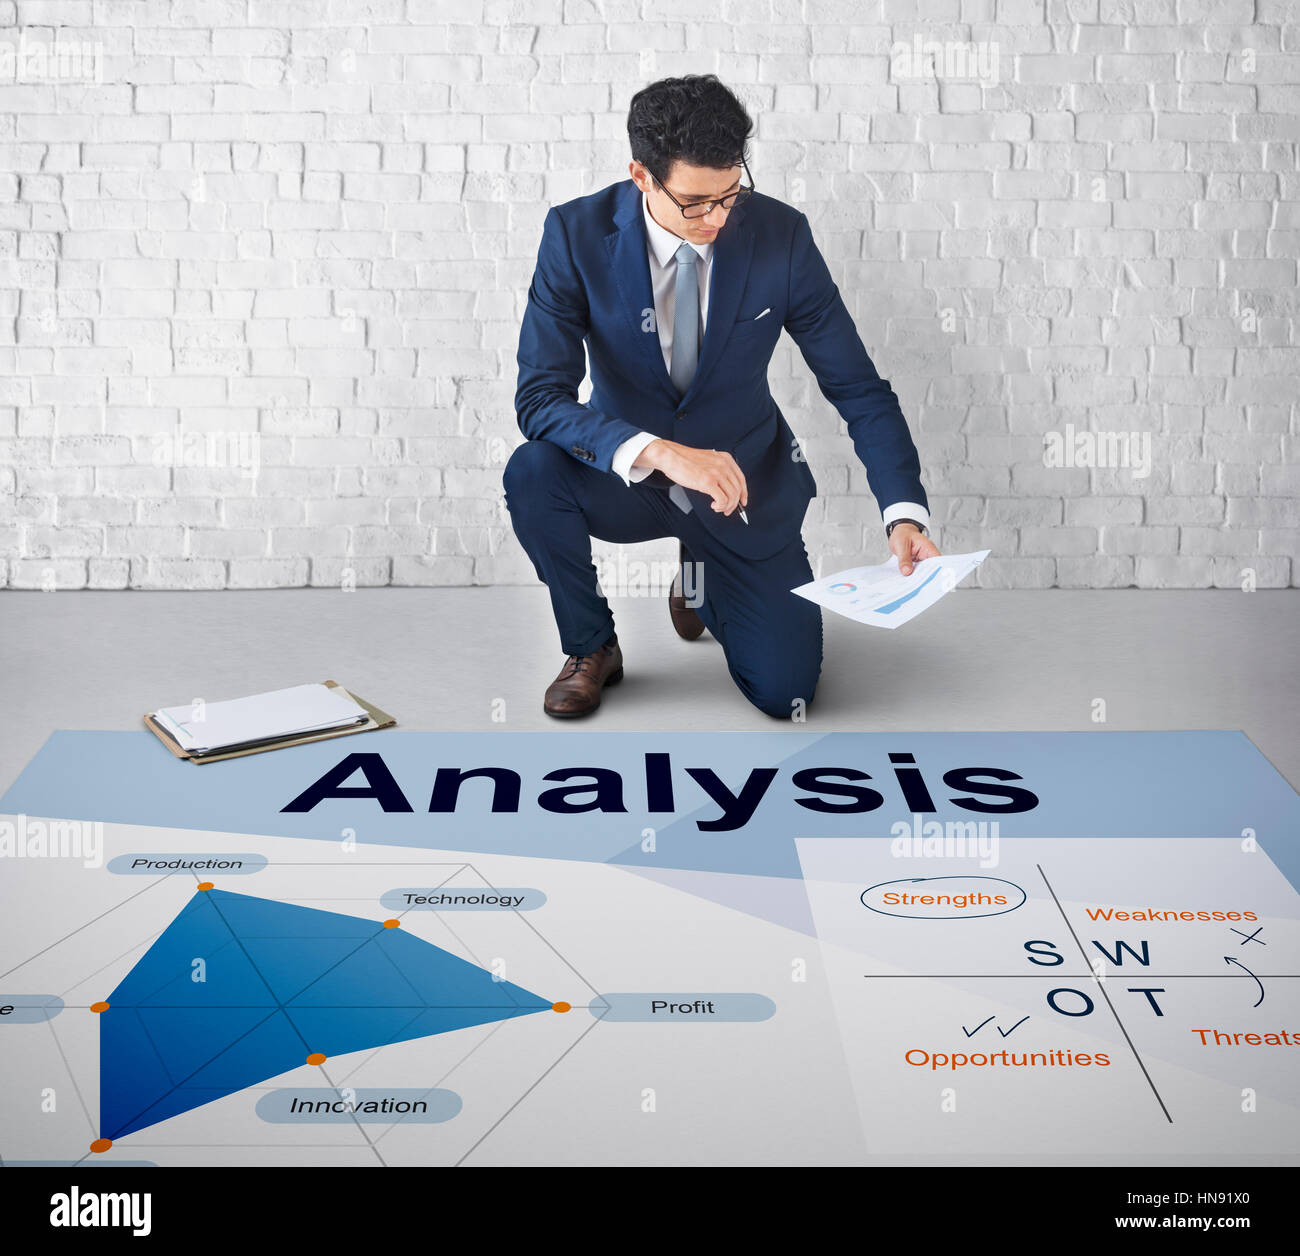 Analysis Innovation Opportunities Strengths Strategic Stock Photo